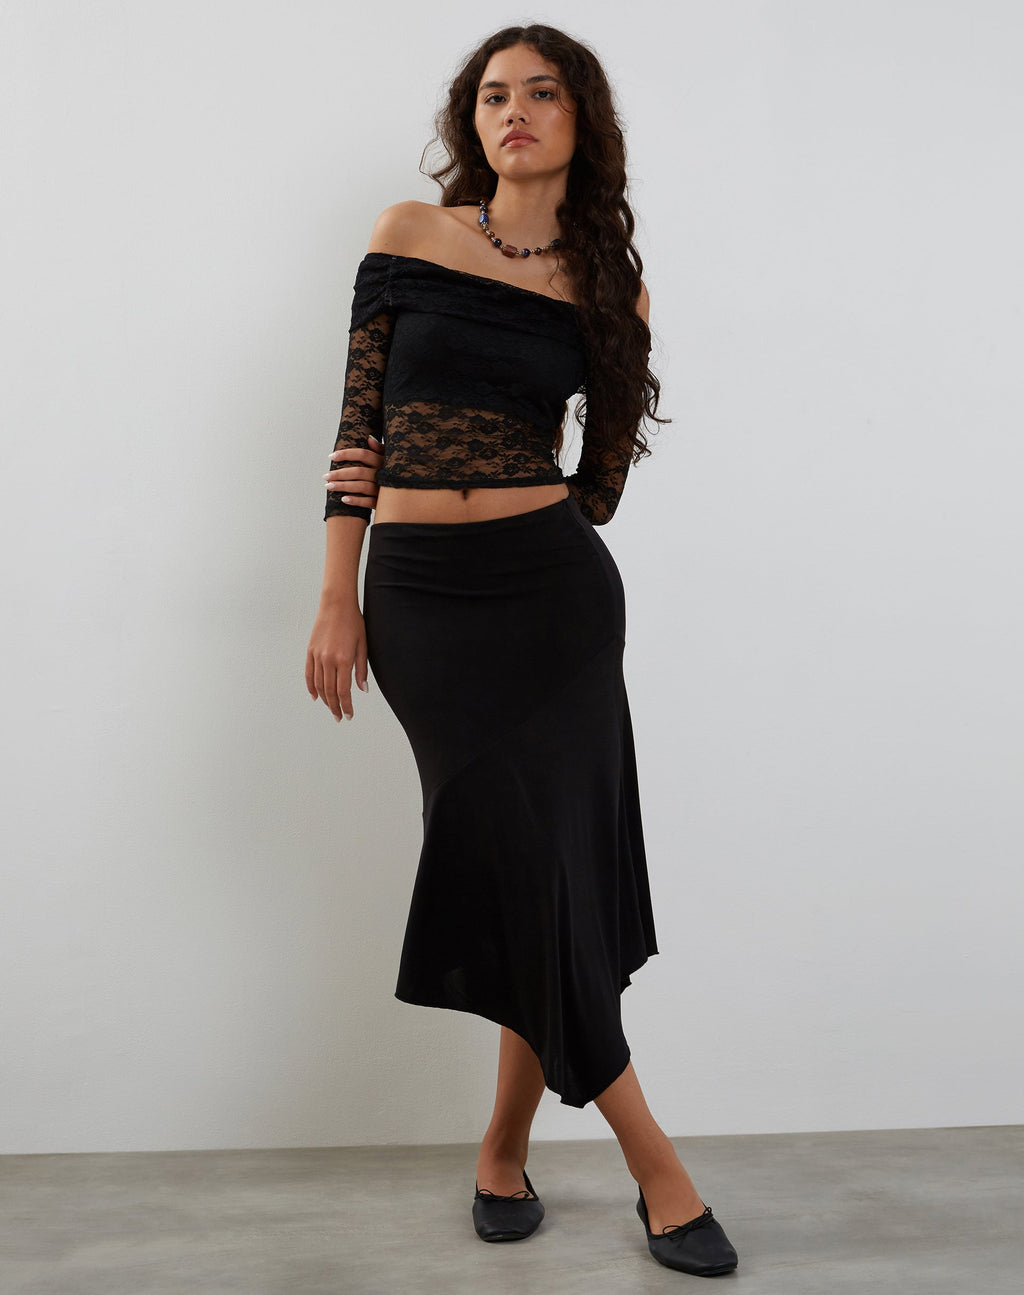 Nixie Long Sleeve Bardot Top in Lace Black (Top bardot à manches longues en dentelle)